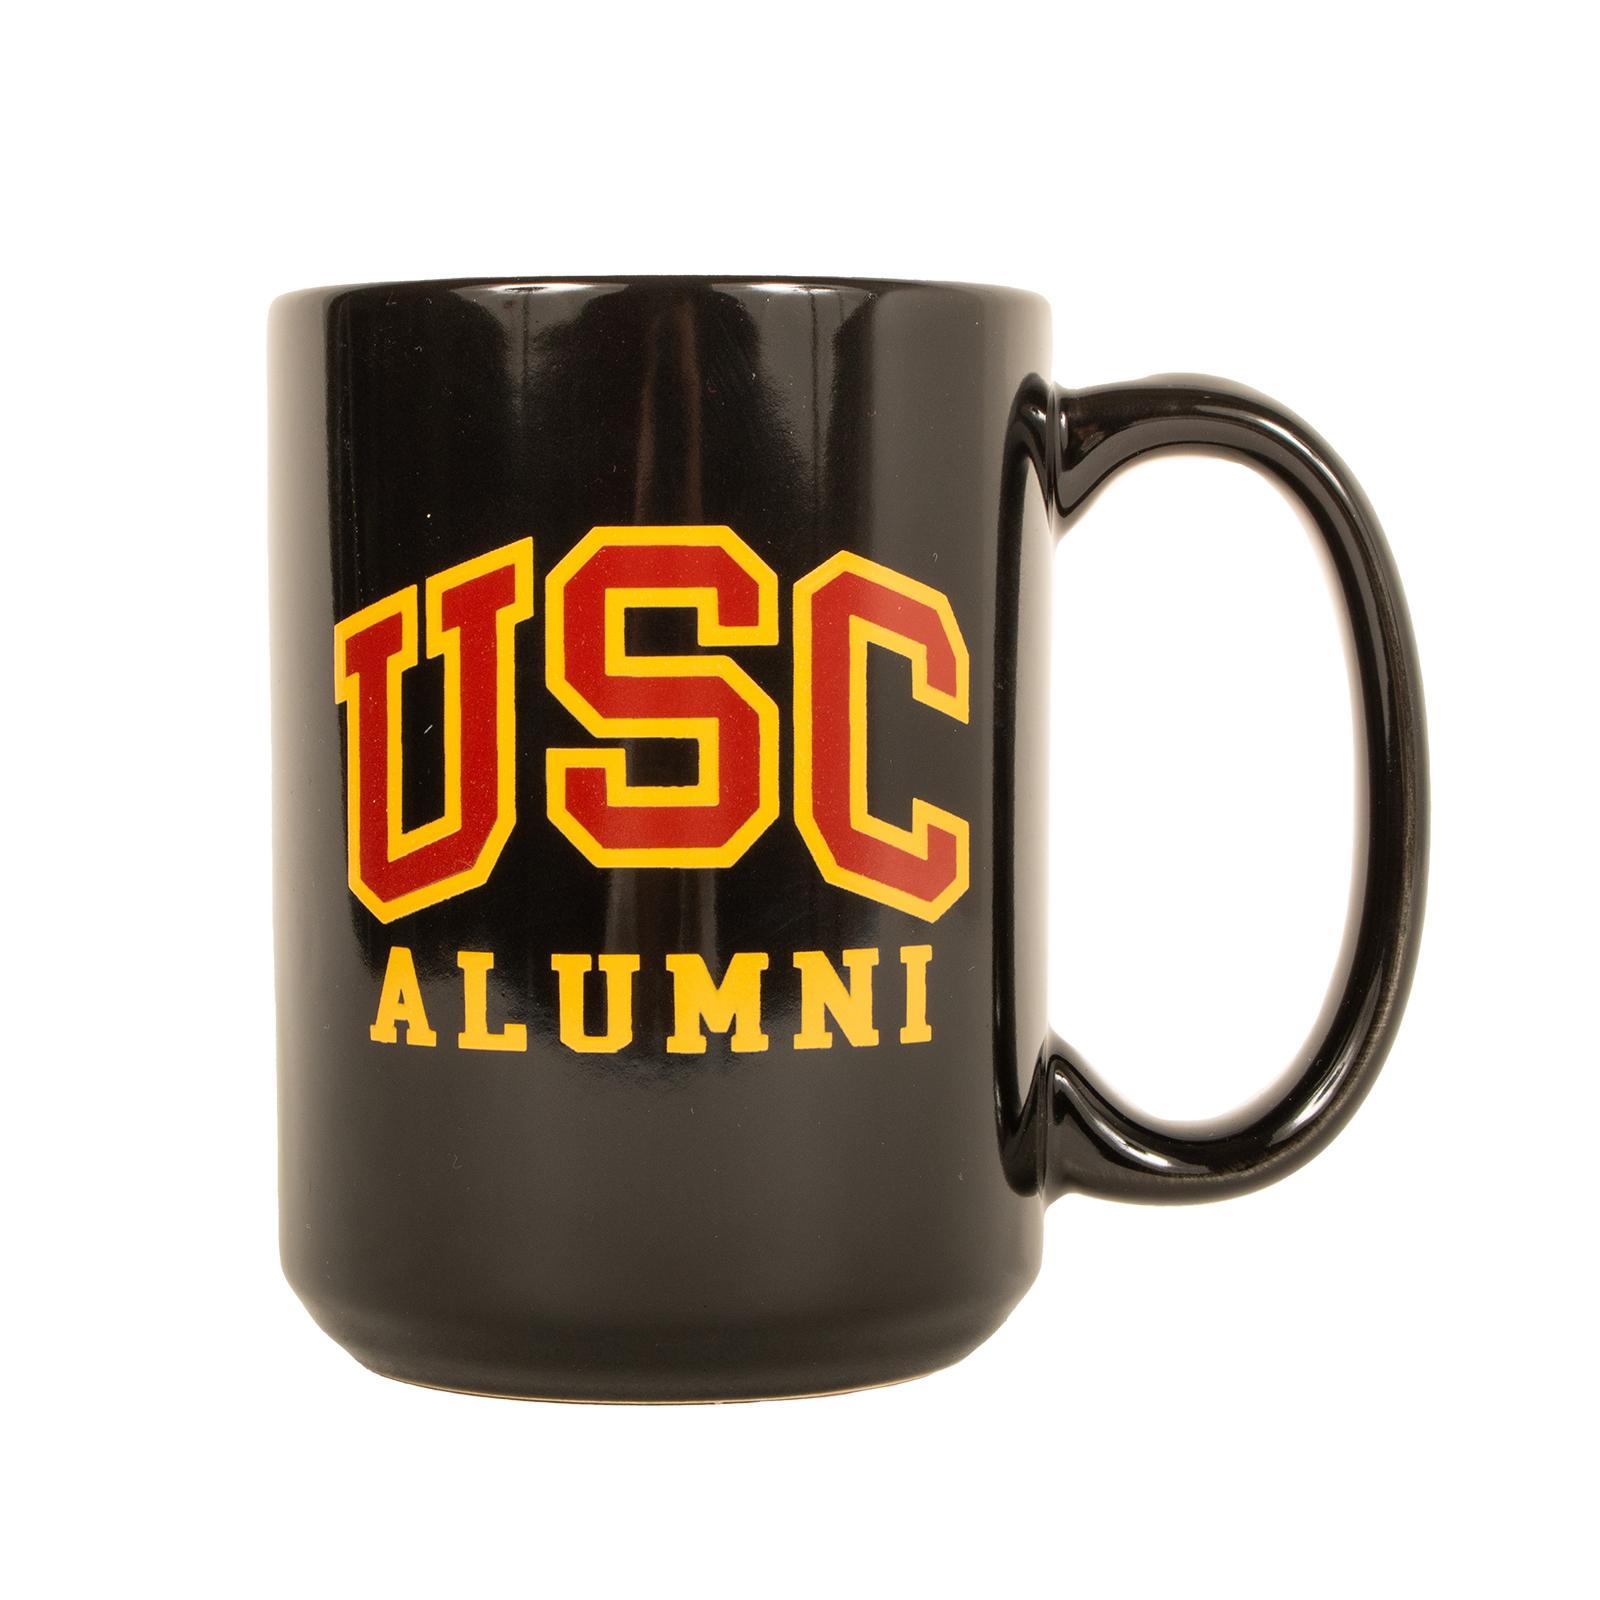 USC Alumni Mug Black by The U Apparel & Gifts image01